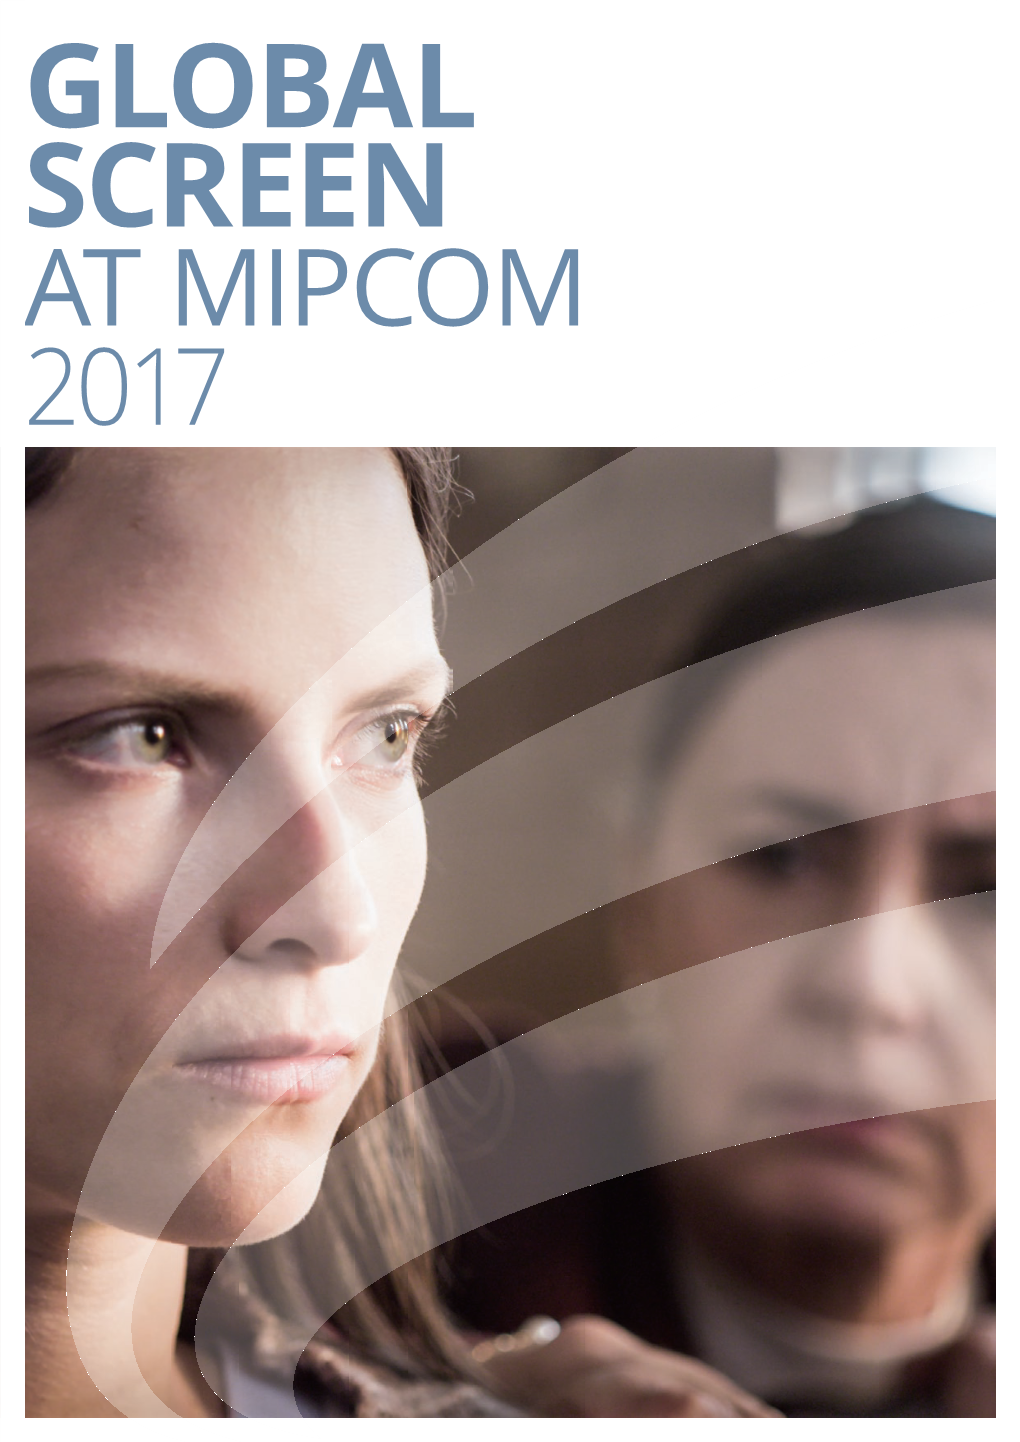 At Mipcom 2017